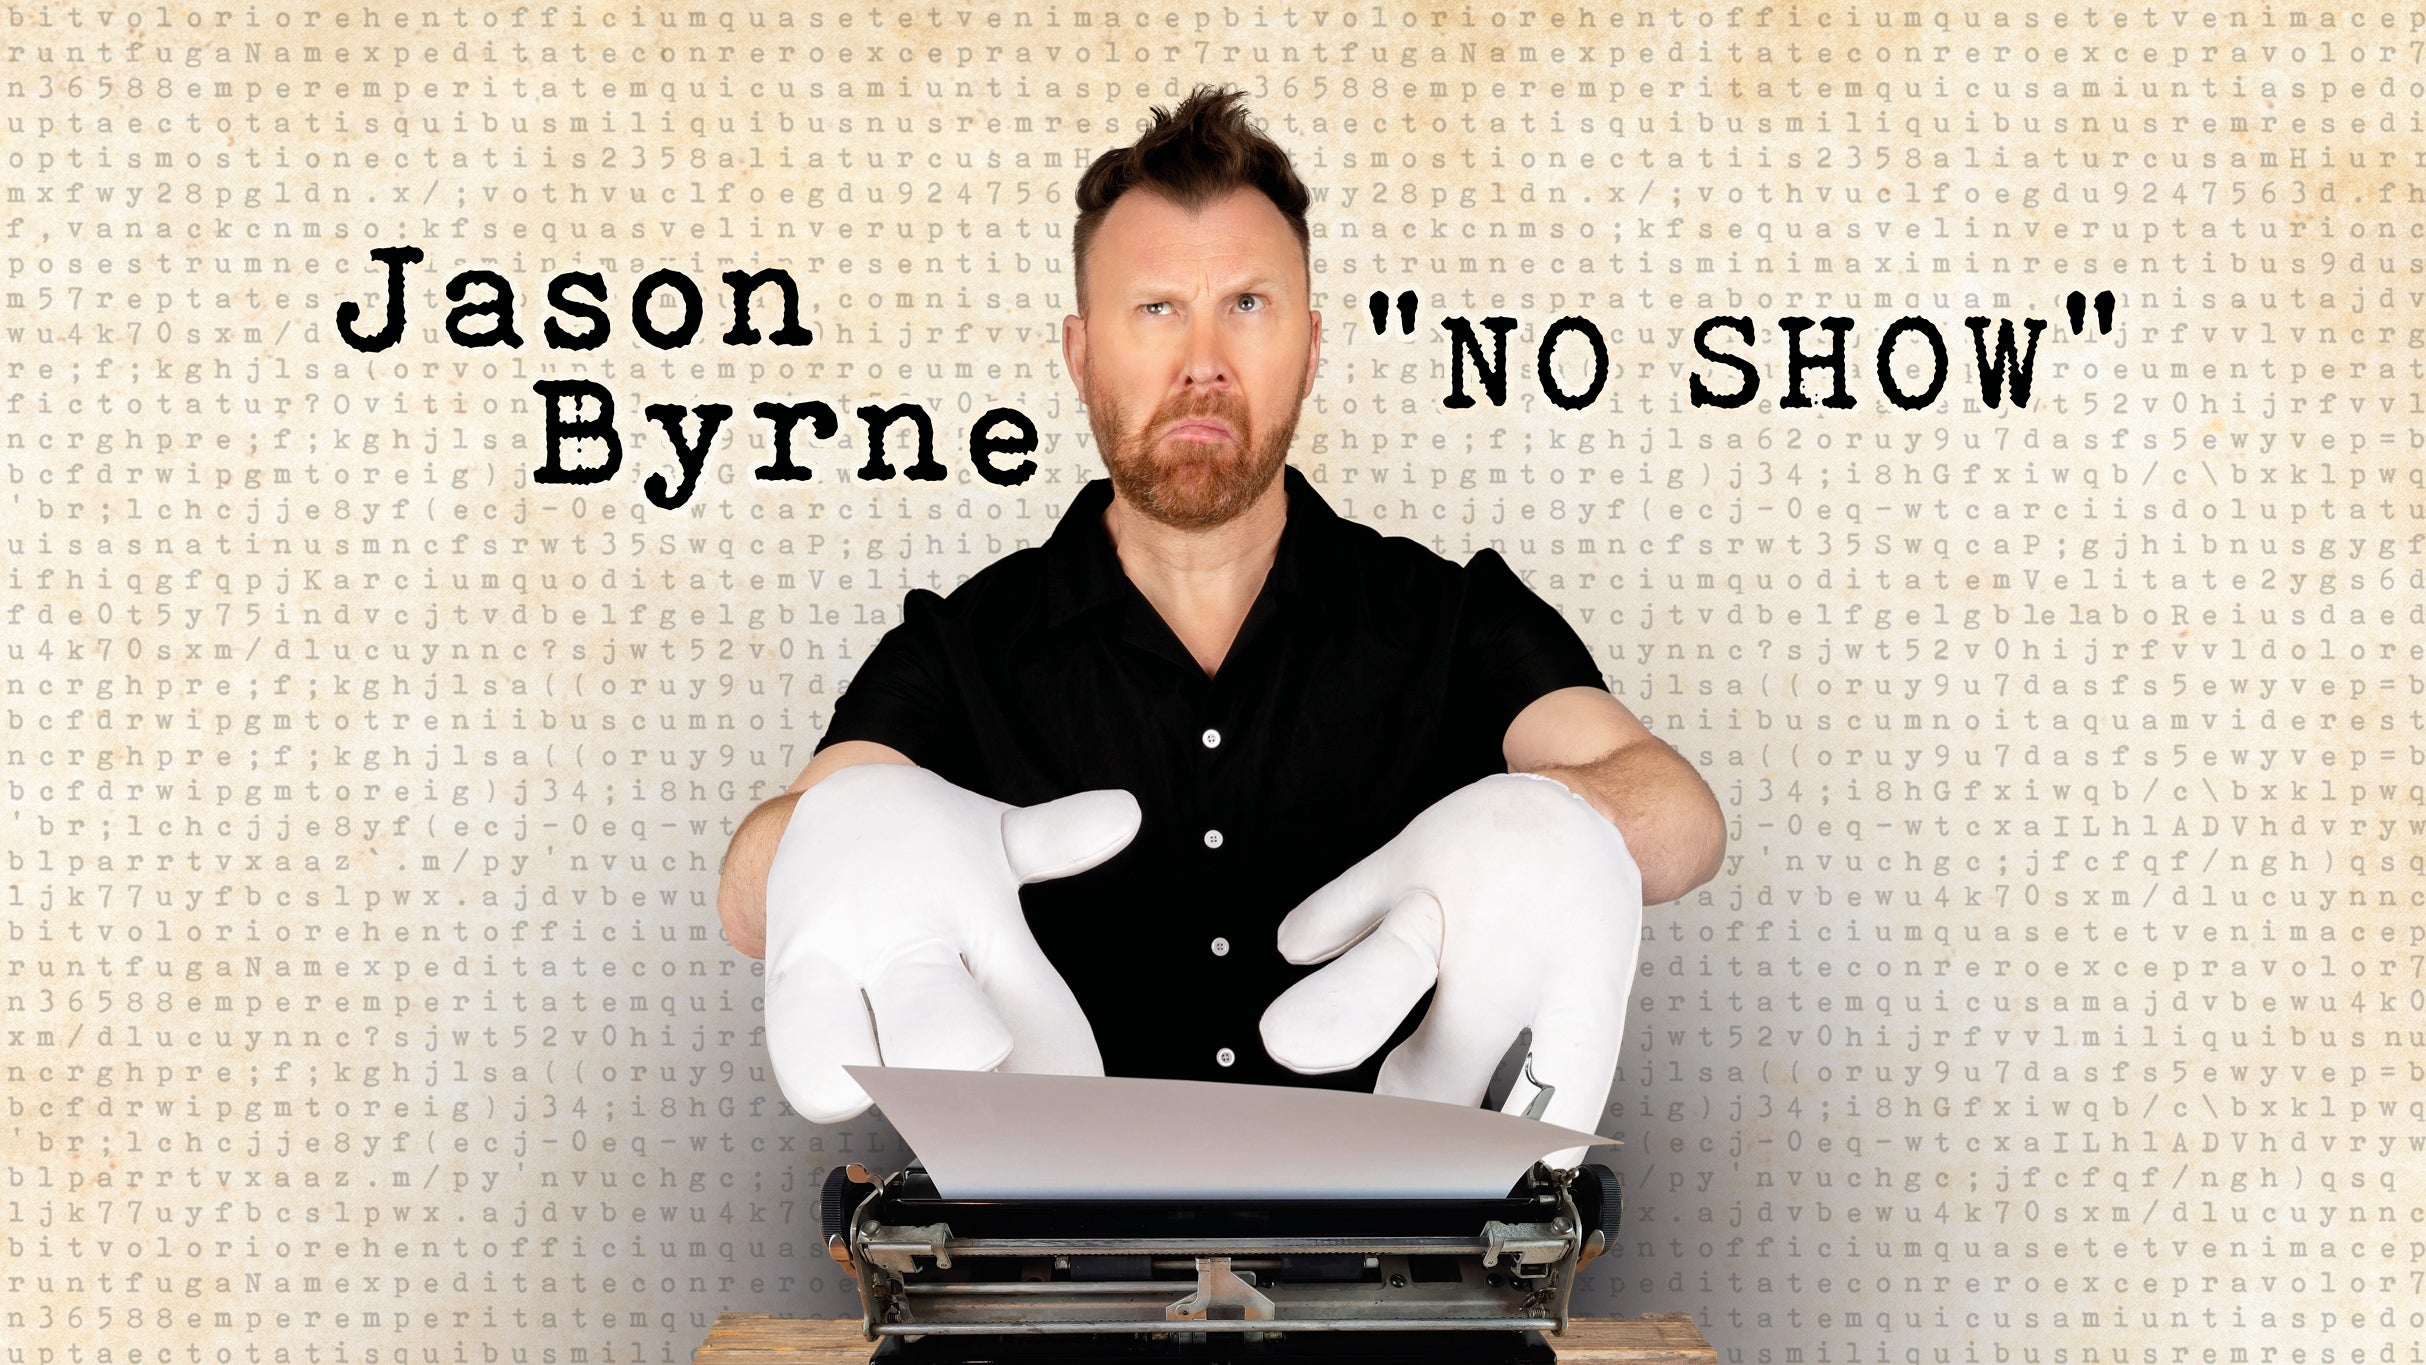 Jason Byrne: No Show Event Title Pic